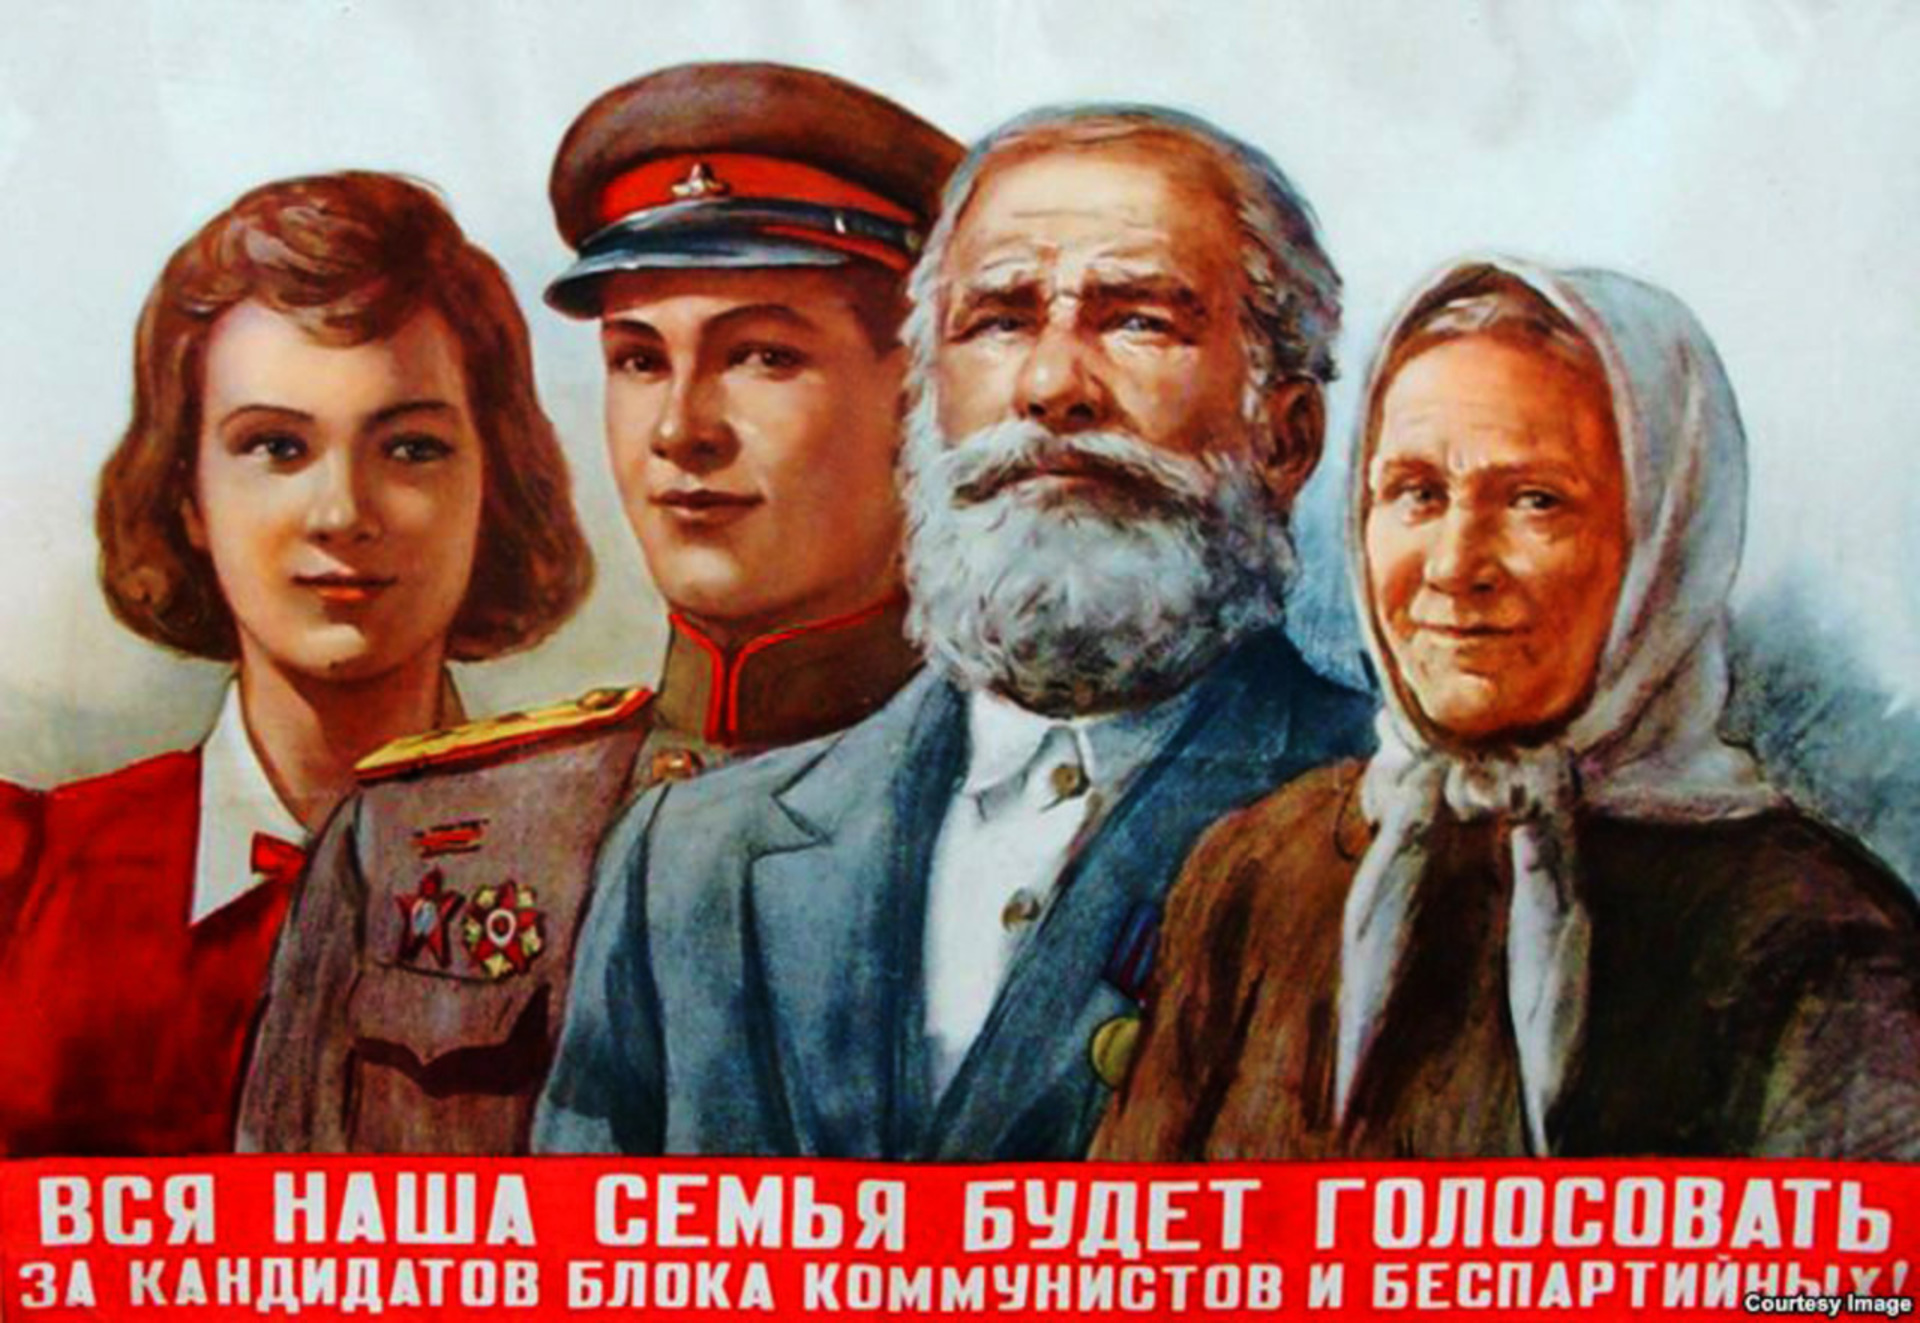 Плакат про выборы. Коммунистические плакаты. Советские плакаты. Советские плакаты про выборы. Советские предвыборные плакаты.